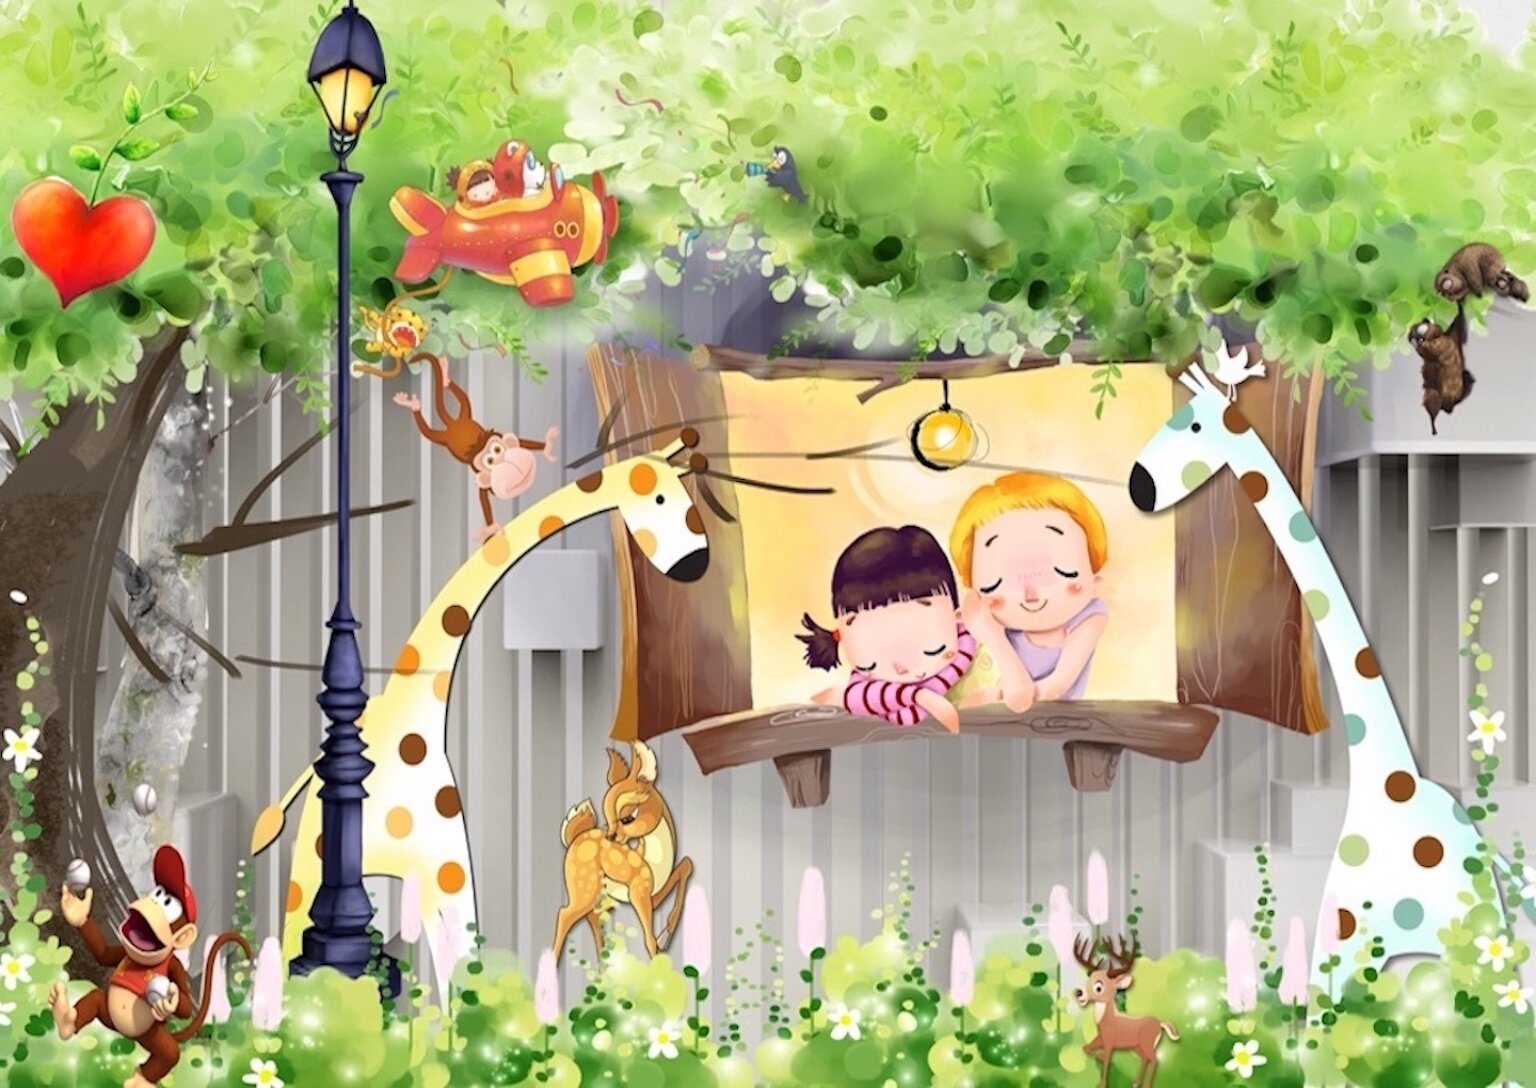 Repeat Jungle Animals Kids Cartoon Safari Picture Photo window roller blind